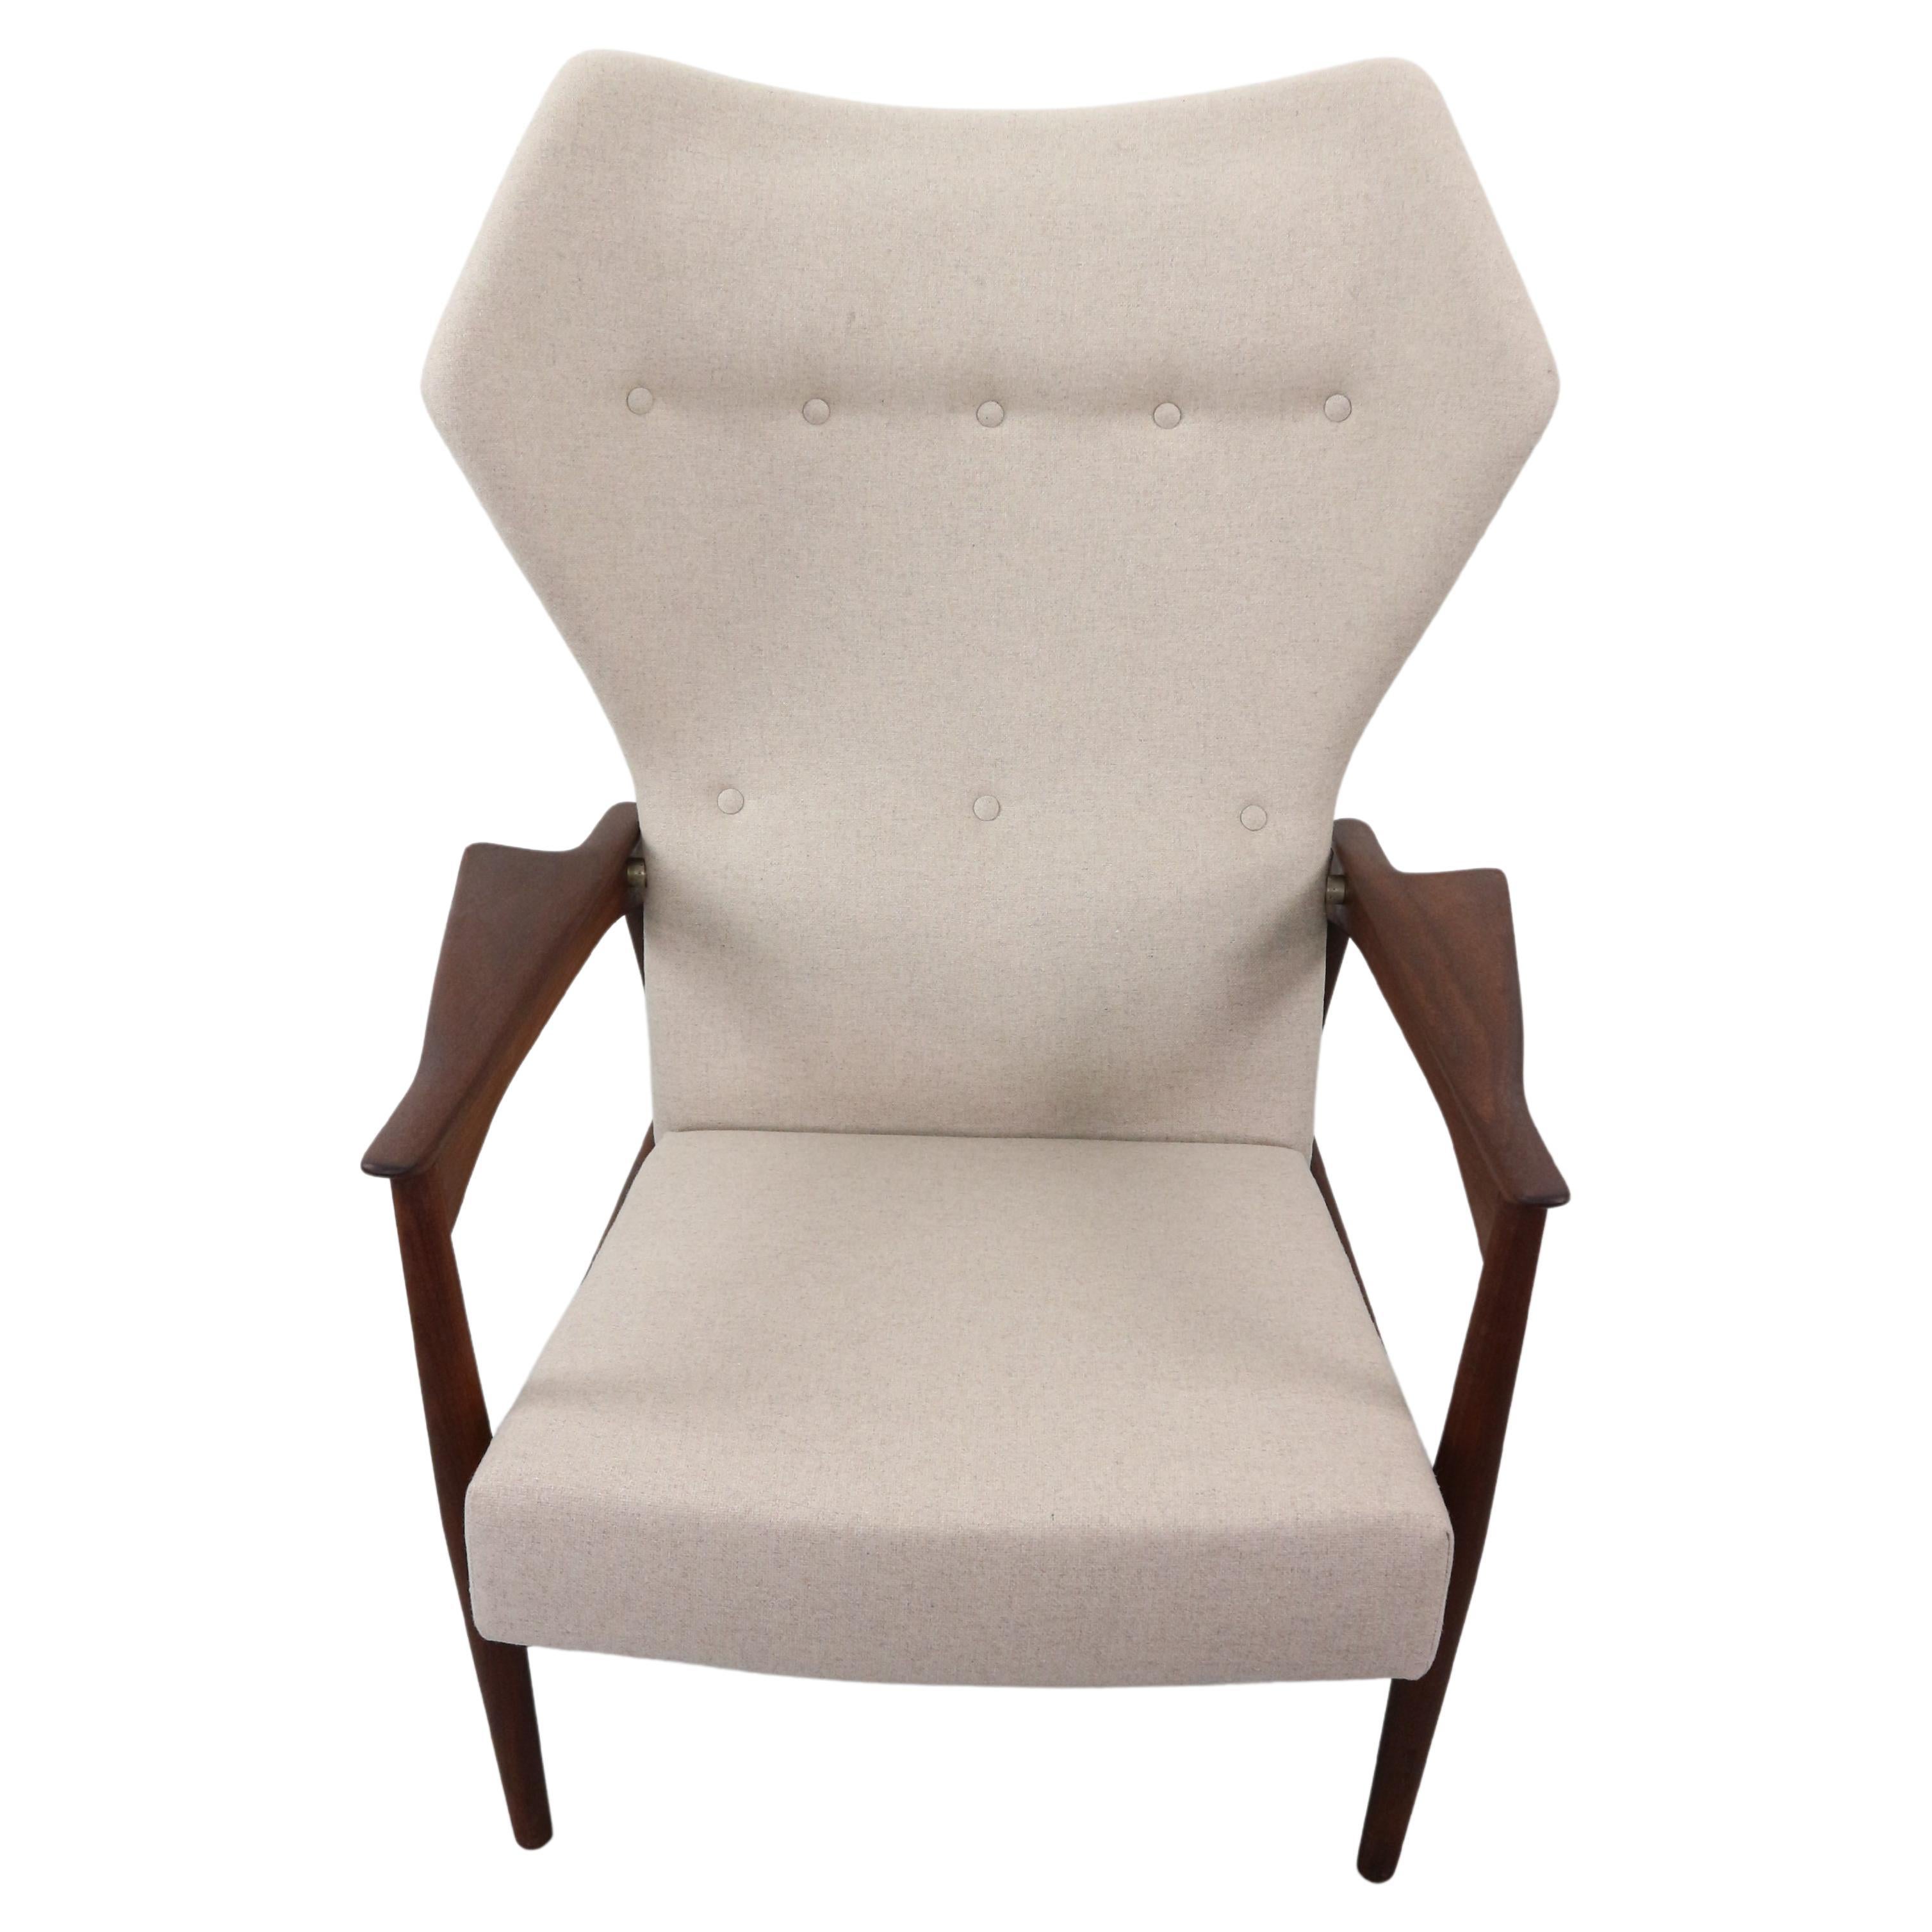 Danish Adjustable Wingback Lounge Chair in Teak, by Ib KOFOD LARSEN For Sale